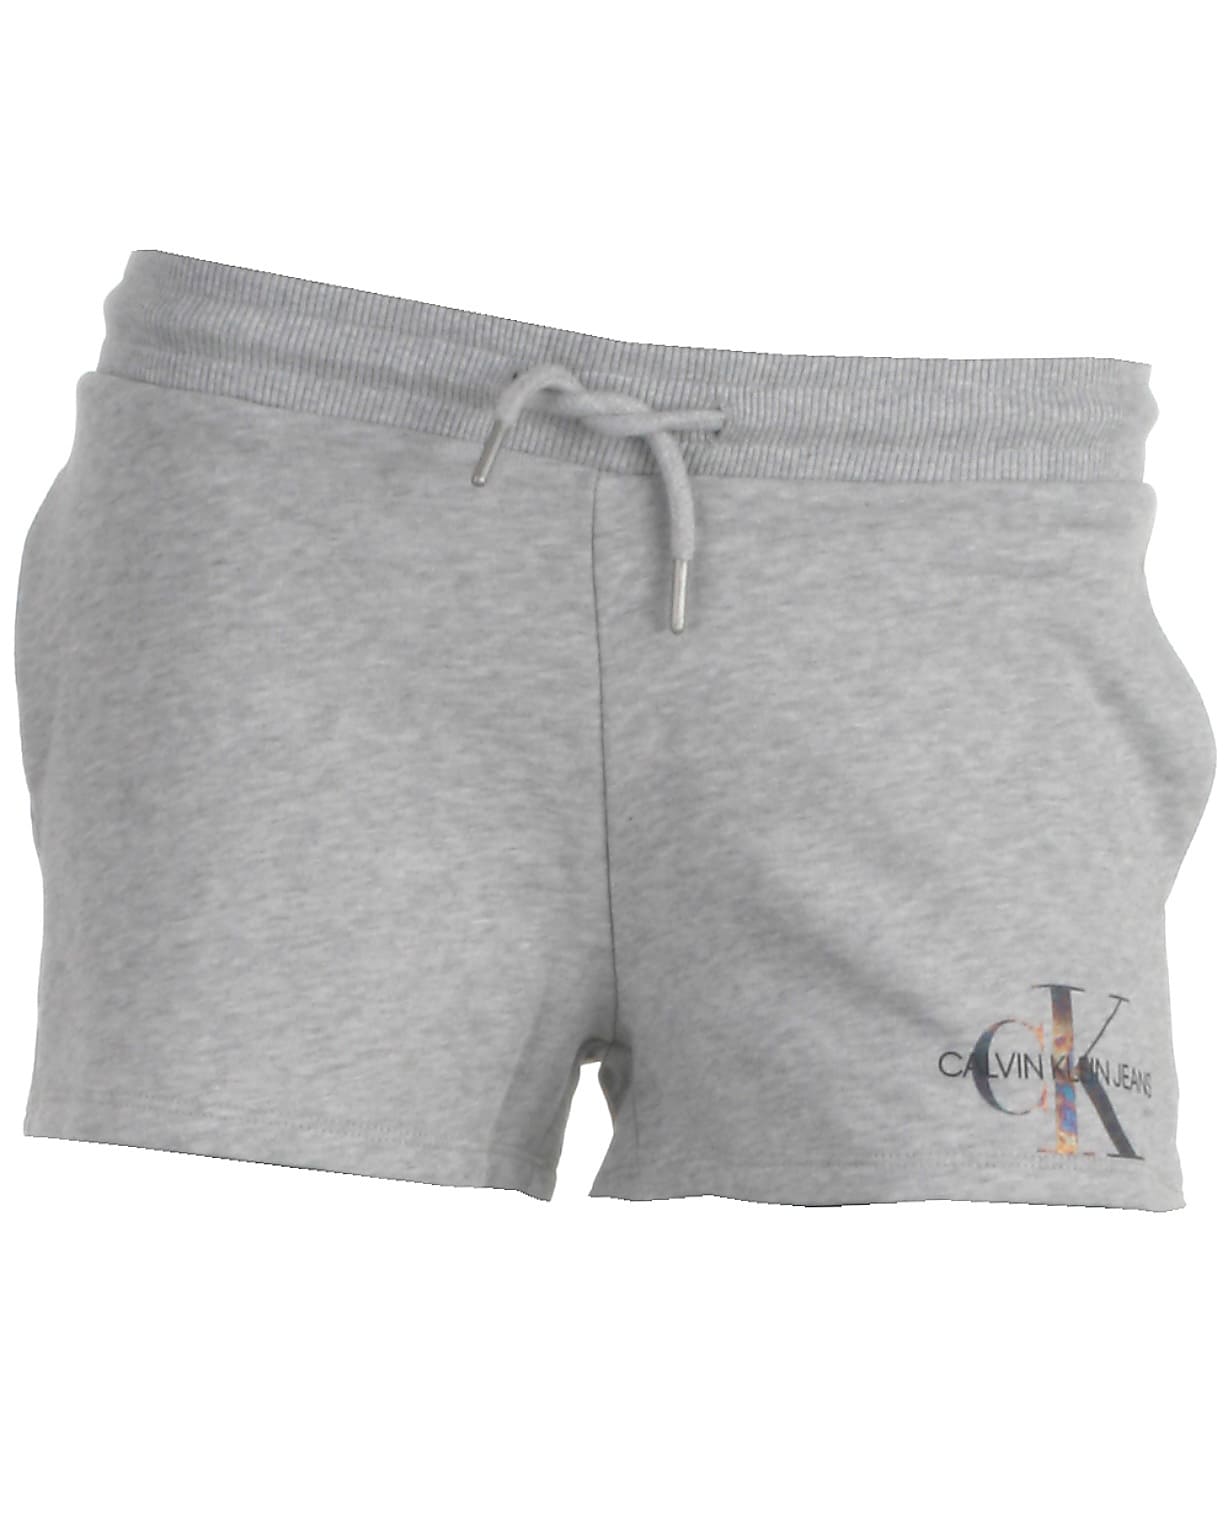 Calvin Klein sweat shorts